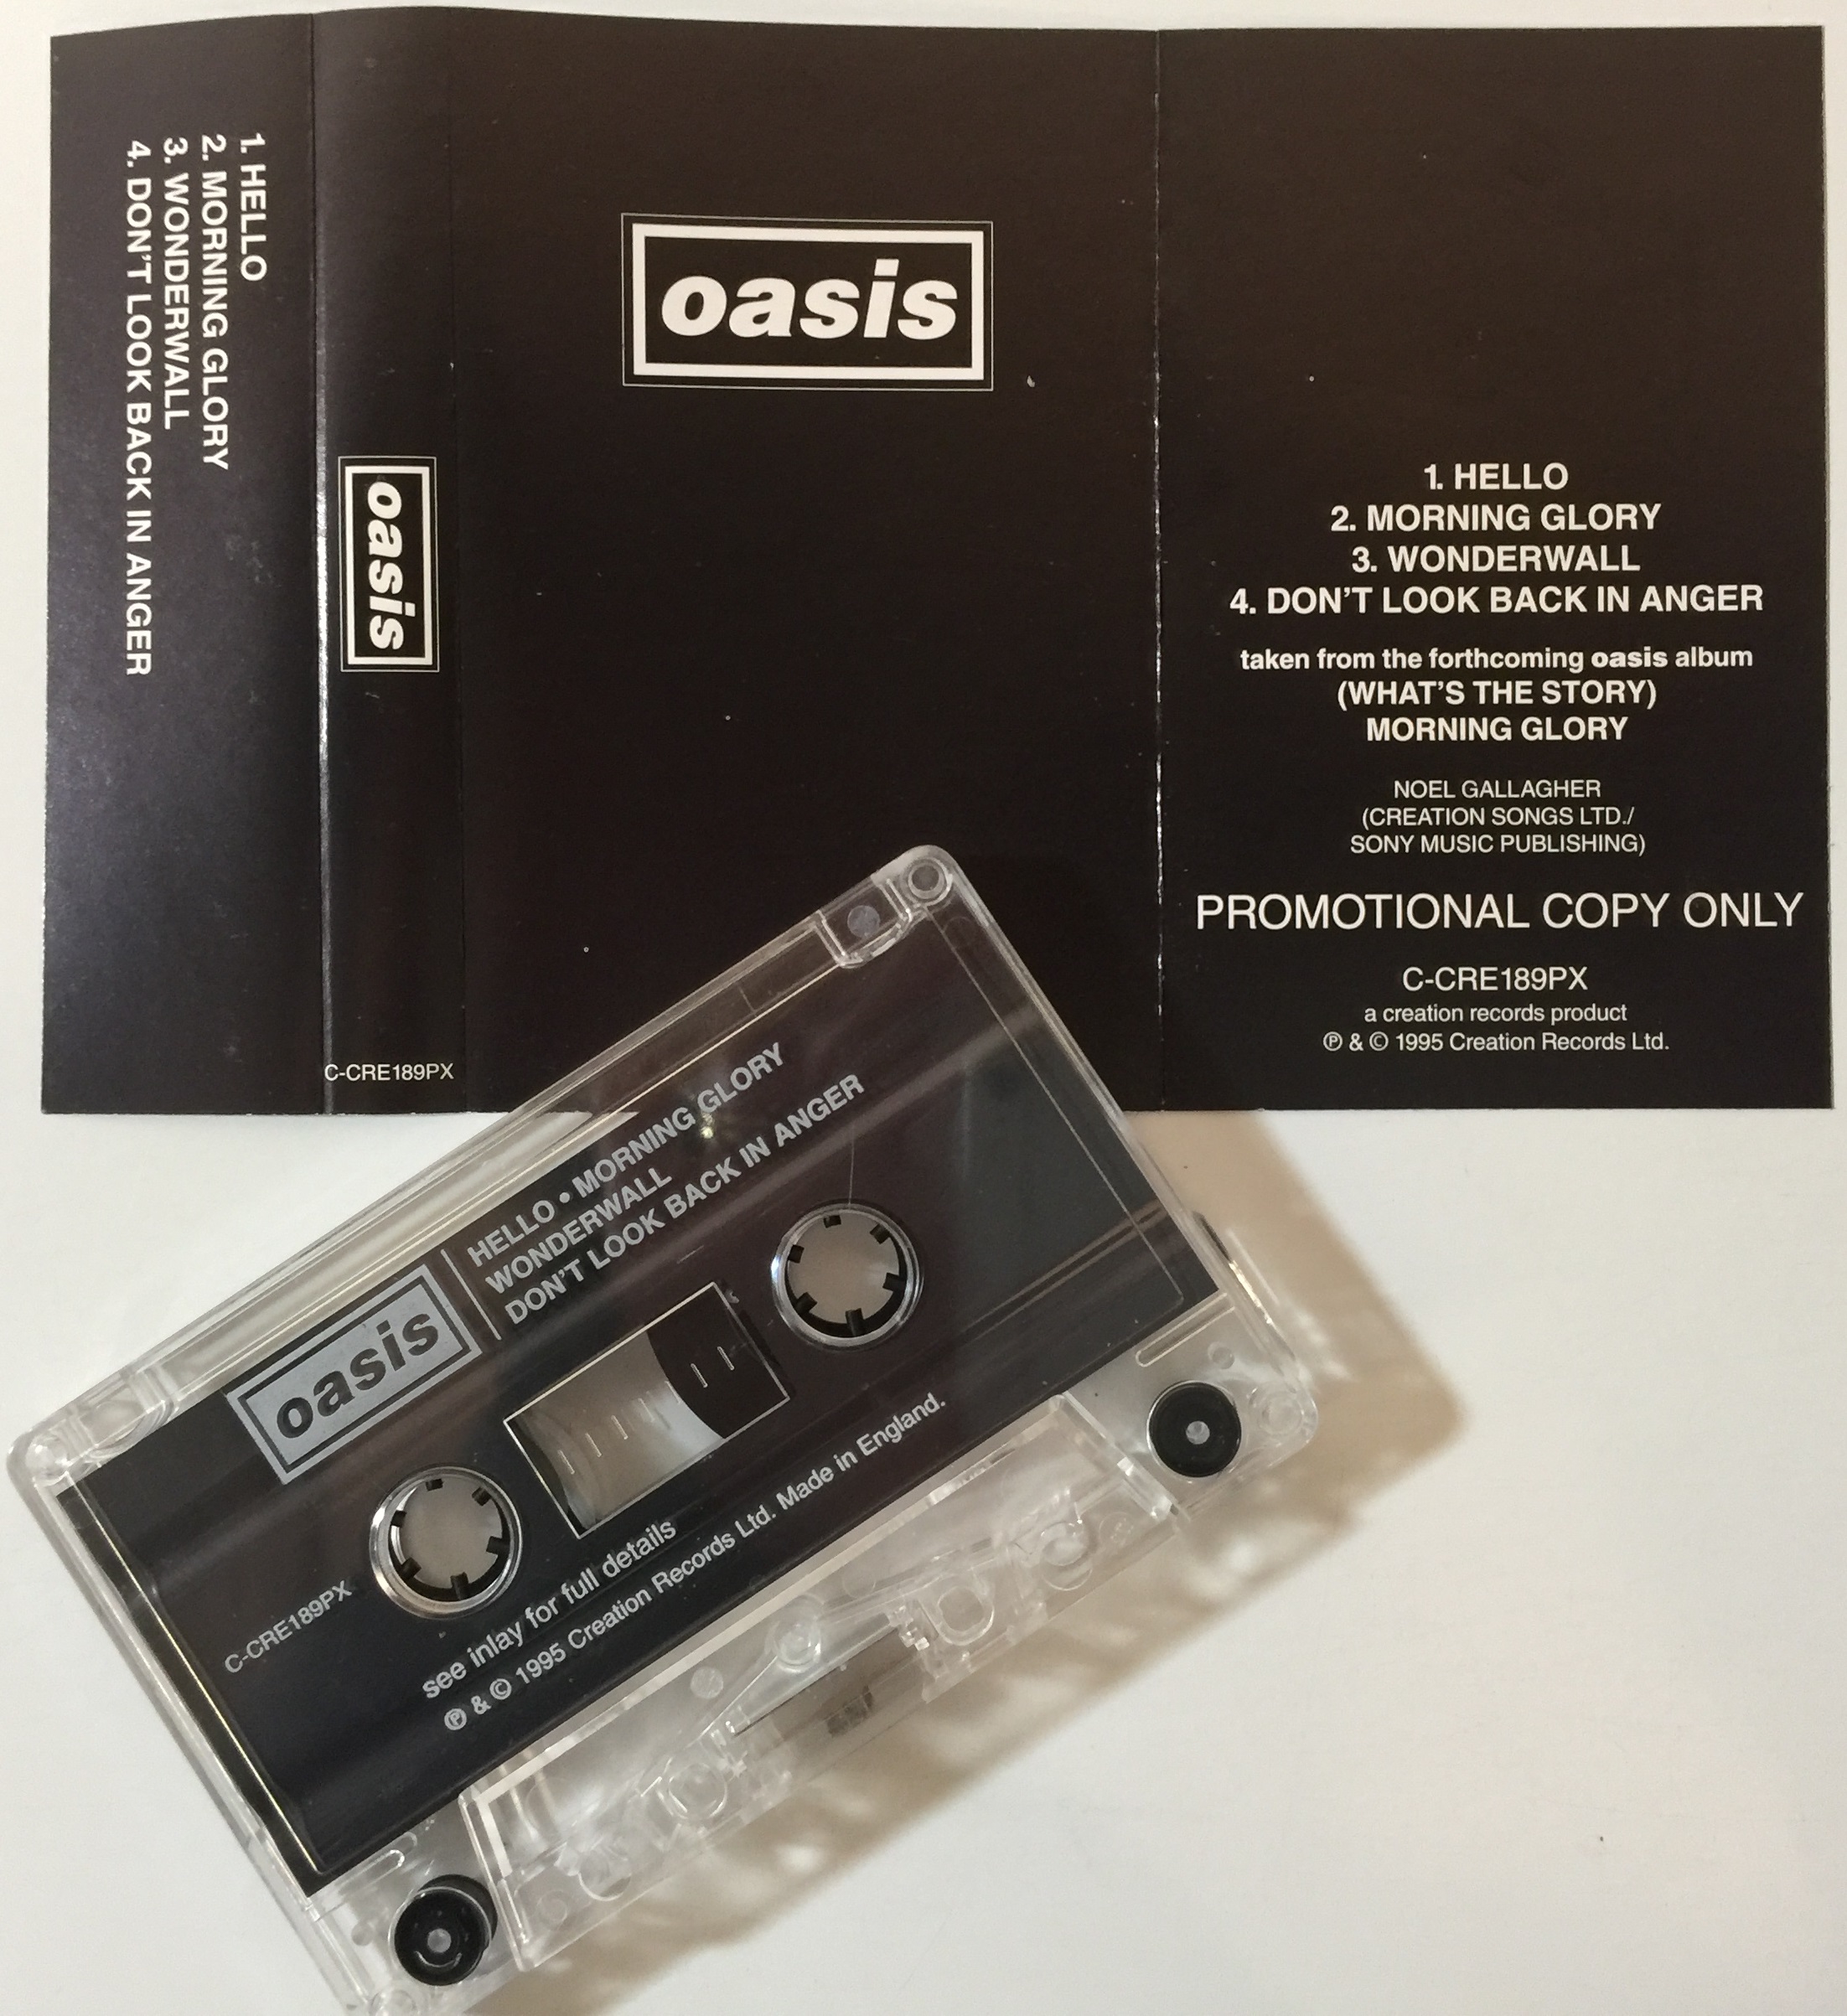 OASIS - PROMO CDs & CASSETTE. - Image 3 of 5